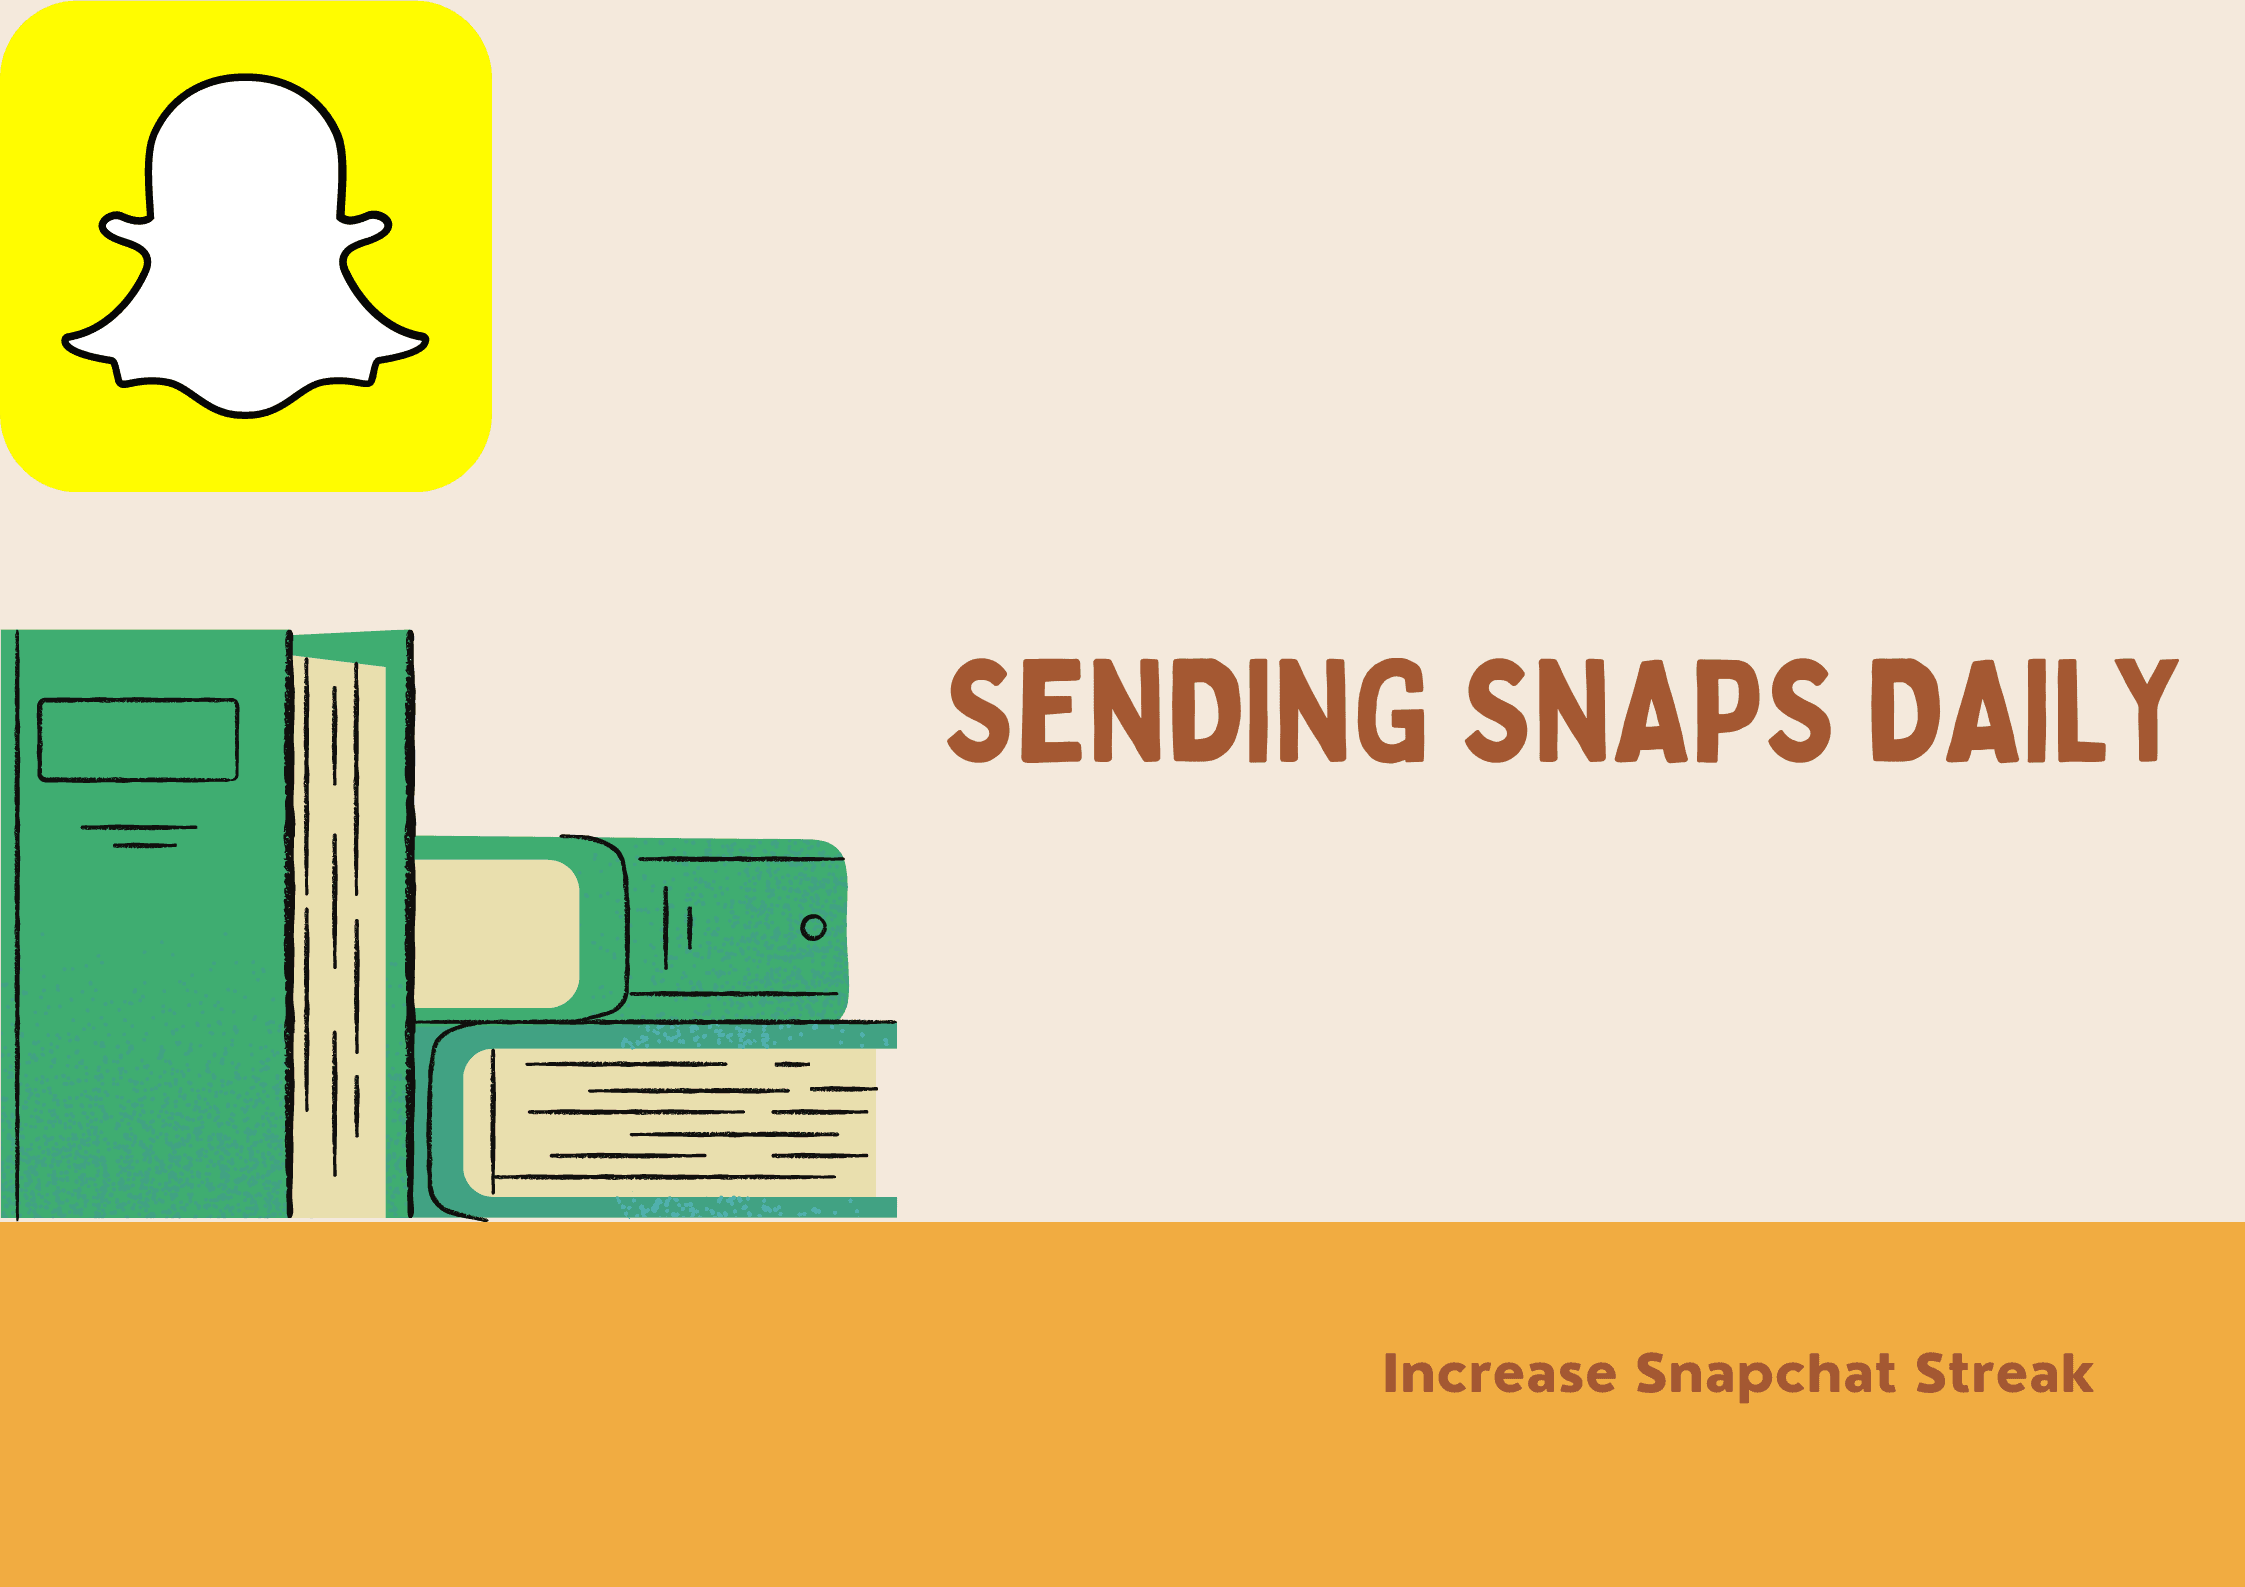 Sending Snaps daily